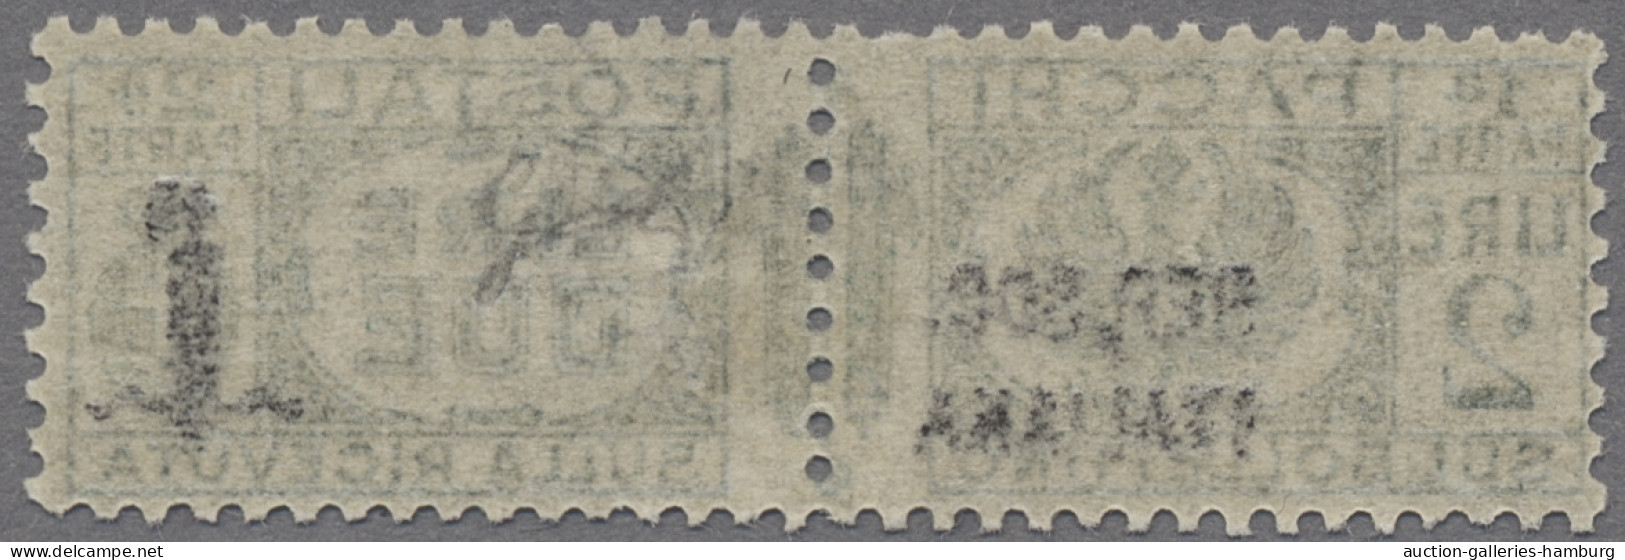 Italy: 1944-1954, "Soziale Republik", Übergangszeit 1945-1946, Militärpostmarken